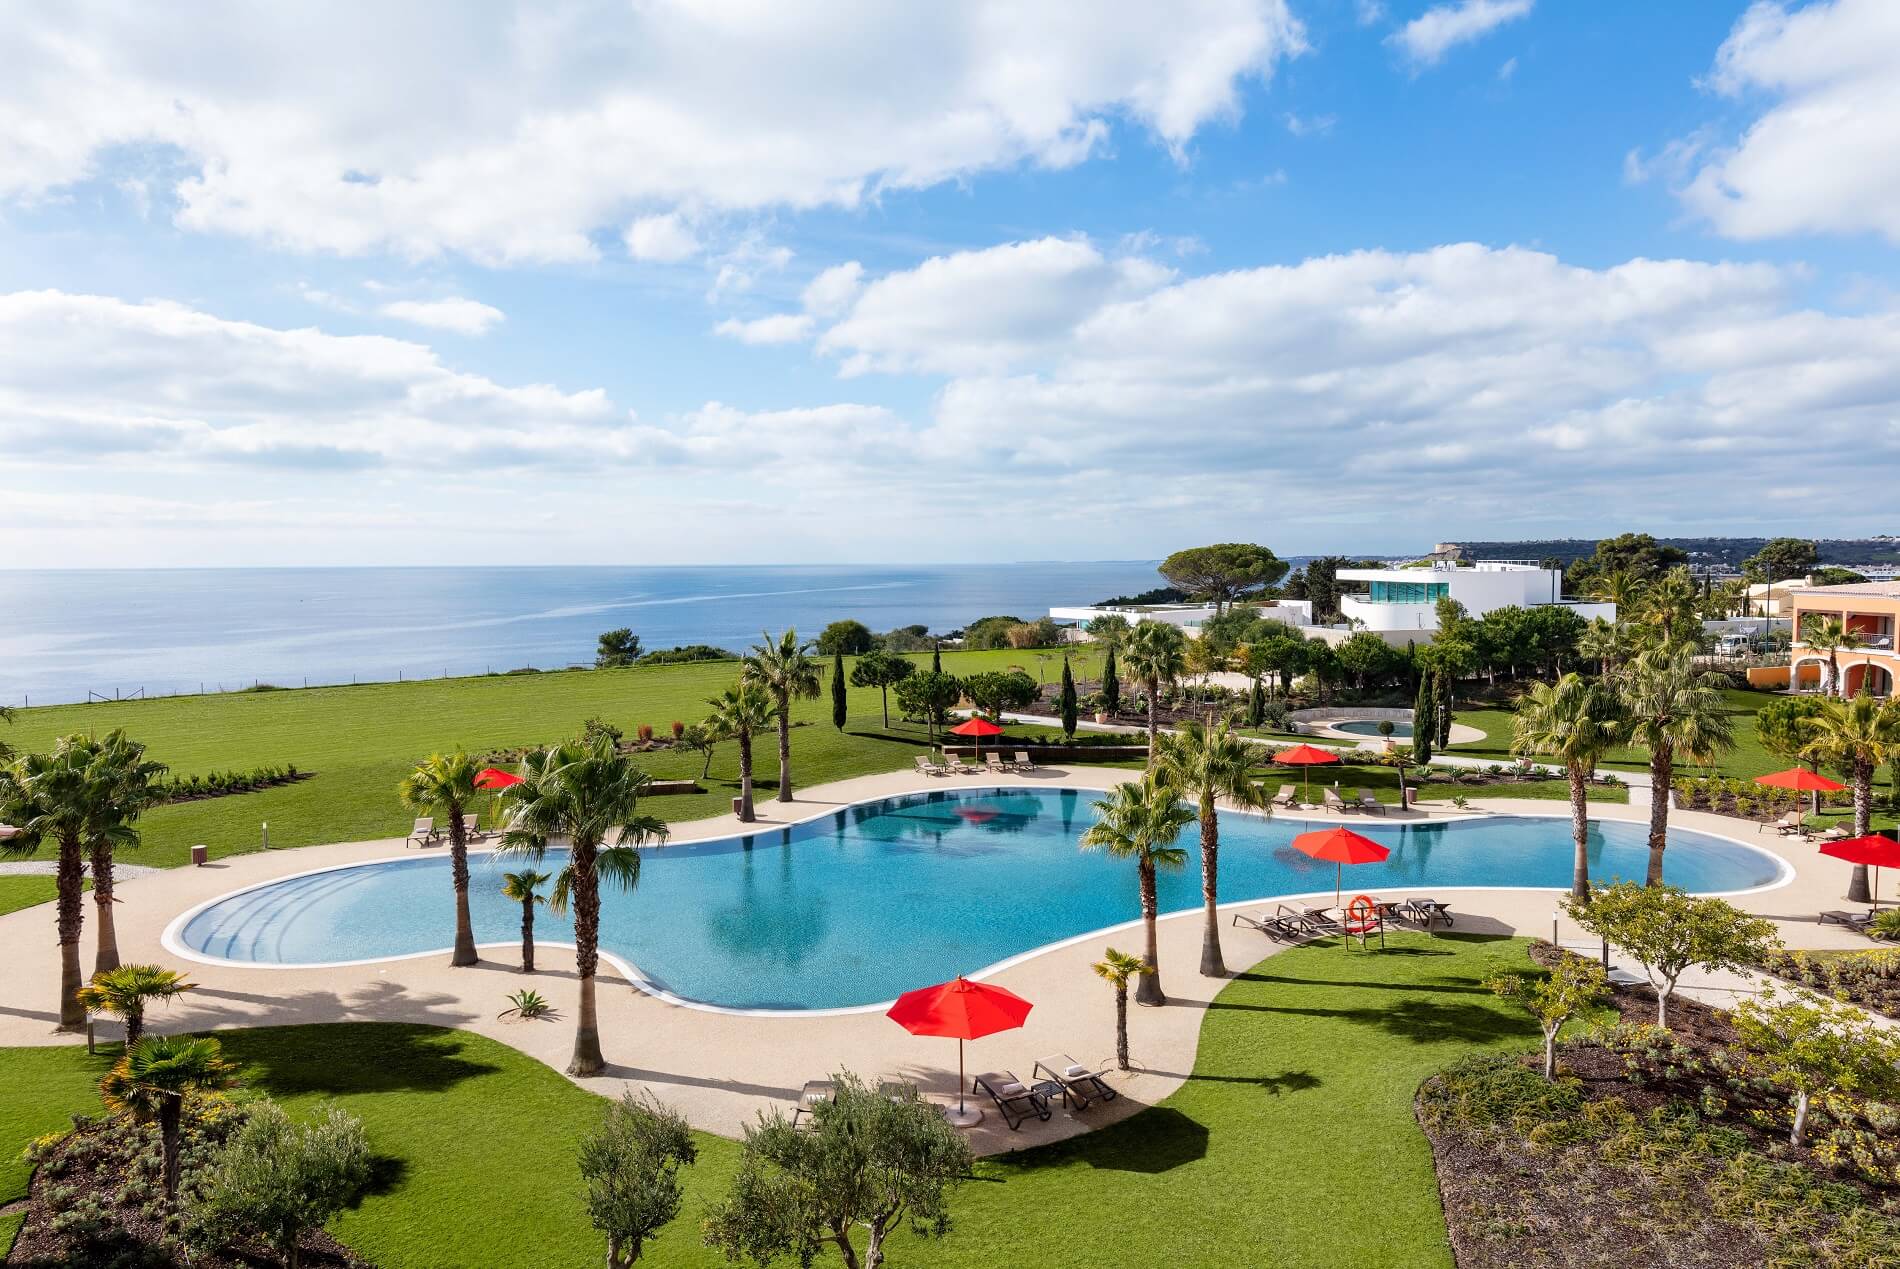 Cascade Wellness Resort Living in the Algarve Free Live Seminar June 15th, 2022